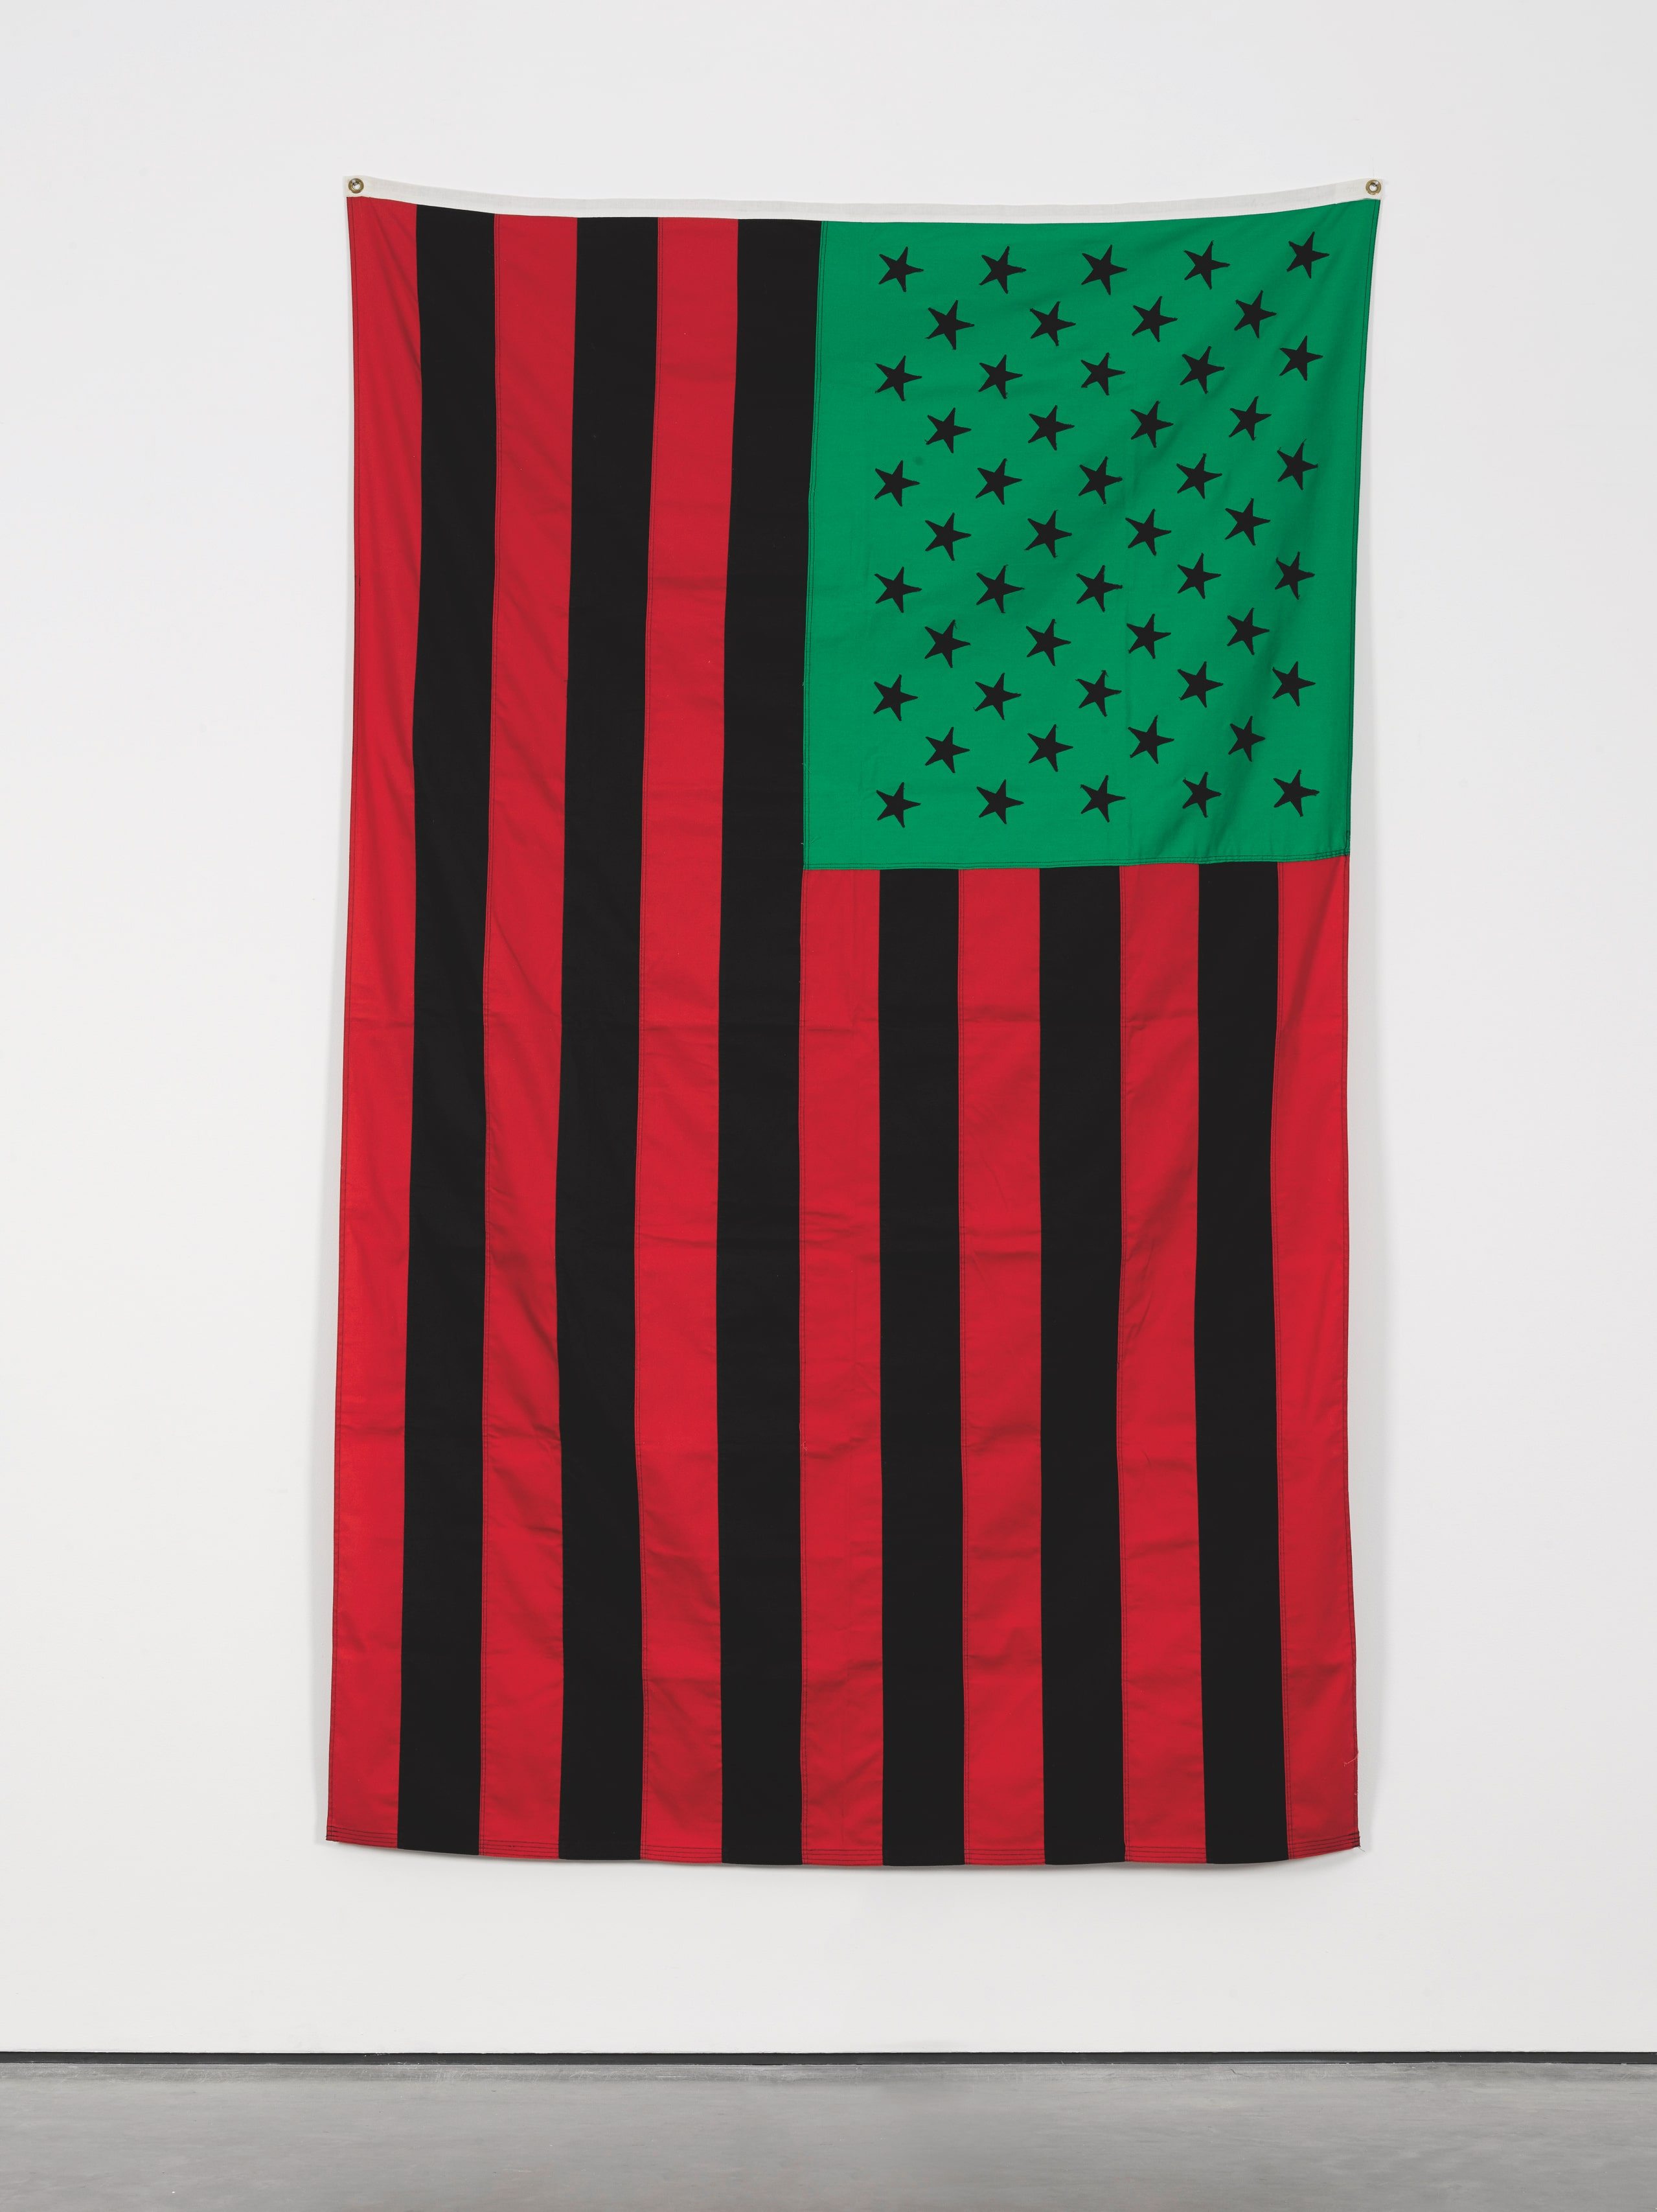 AFRICAN AMERICAN FLAG (1989). TISSU COUSU, 153,7 X 245,7 CM.
David Hammons. Photo : Genevieve Hanson. Courtesy David Hammons and Hauser & Wirth